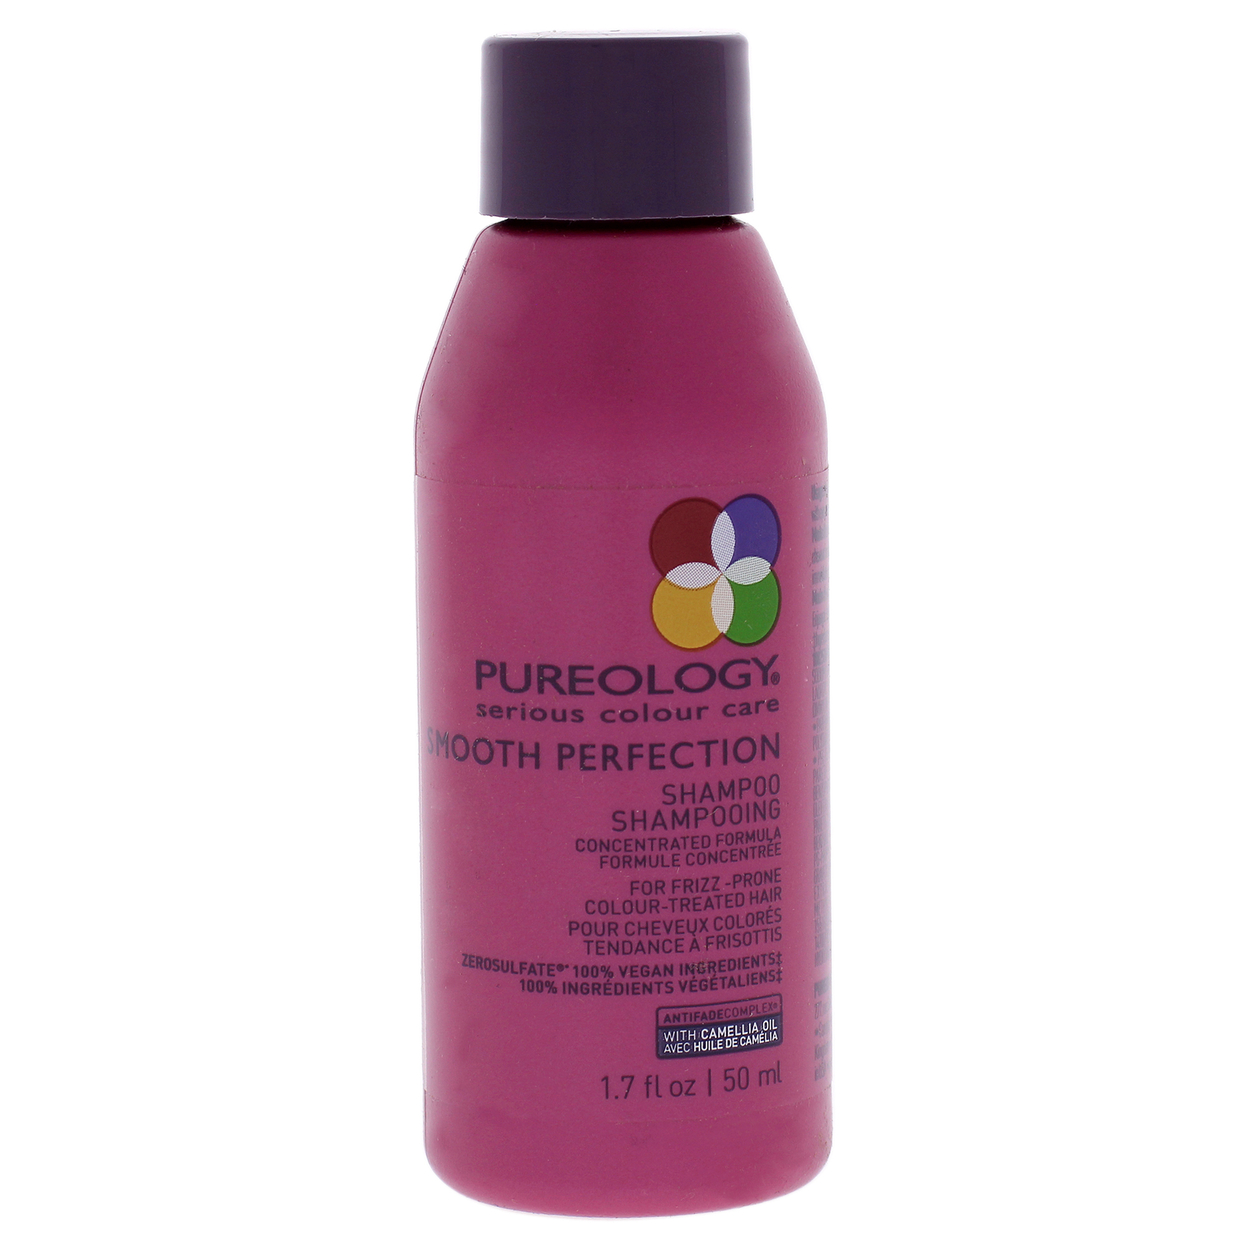 Pureology Smooth Perfection Shampoo 1.7 Oz